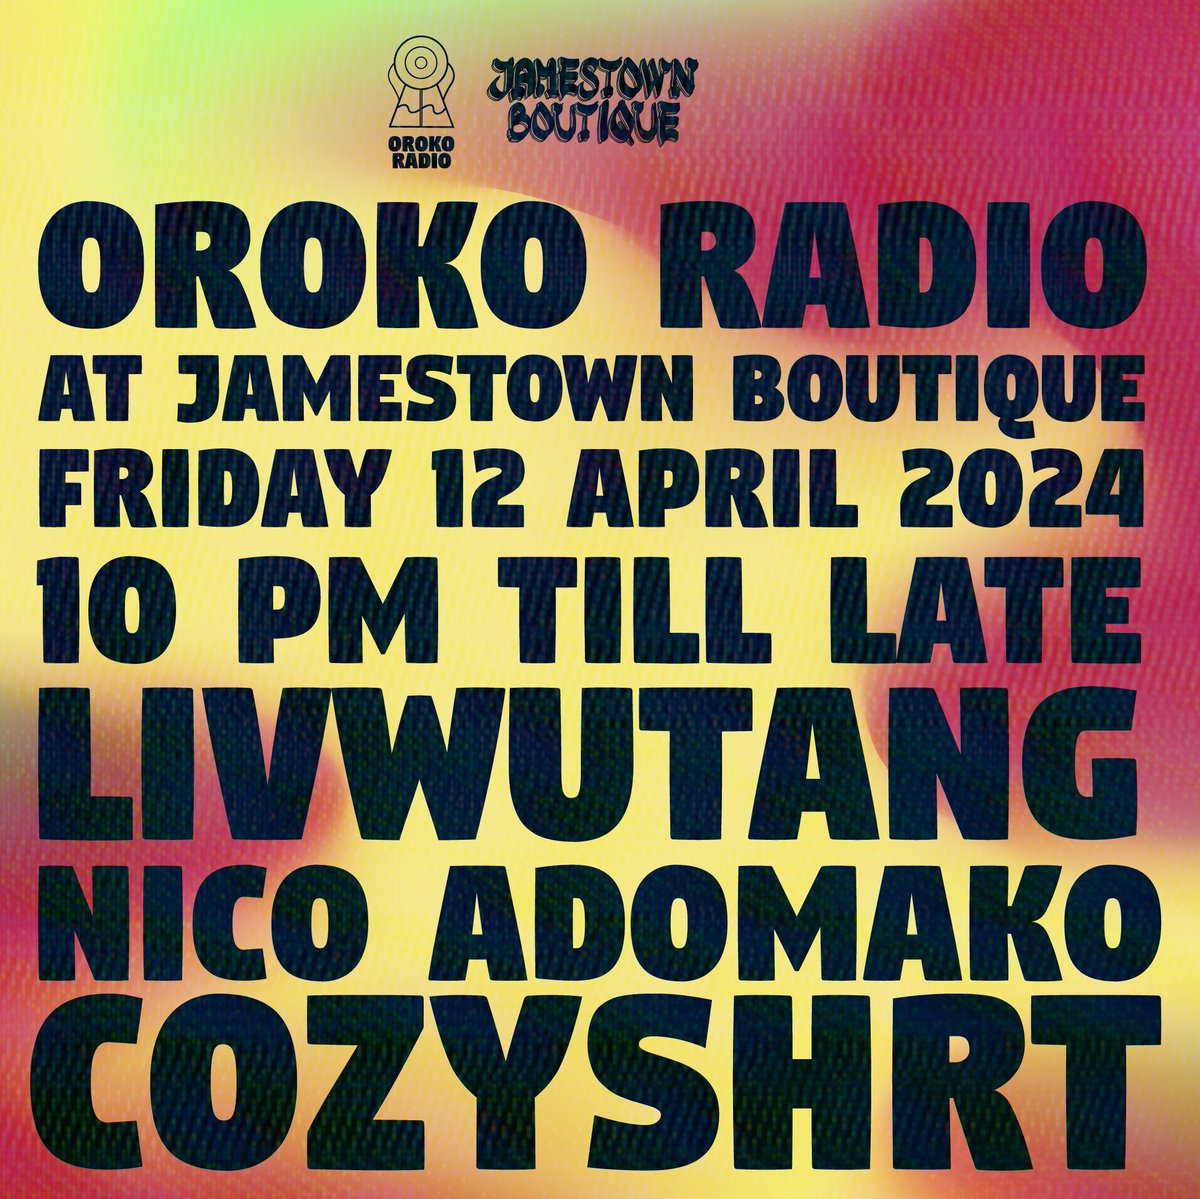 ⏰ OROKO RADIO AT JAMESTOWN BOUTIQUE, ACCRA Friday, 12 April 2024 10 PM till late Sounds by: #cozyshrt @livwutang @Nico_Adomako 📡🌍🇬🇭